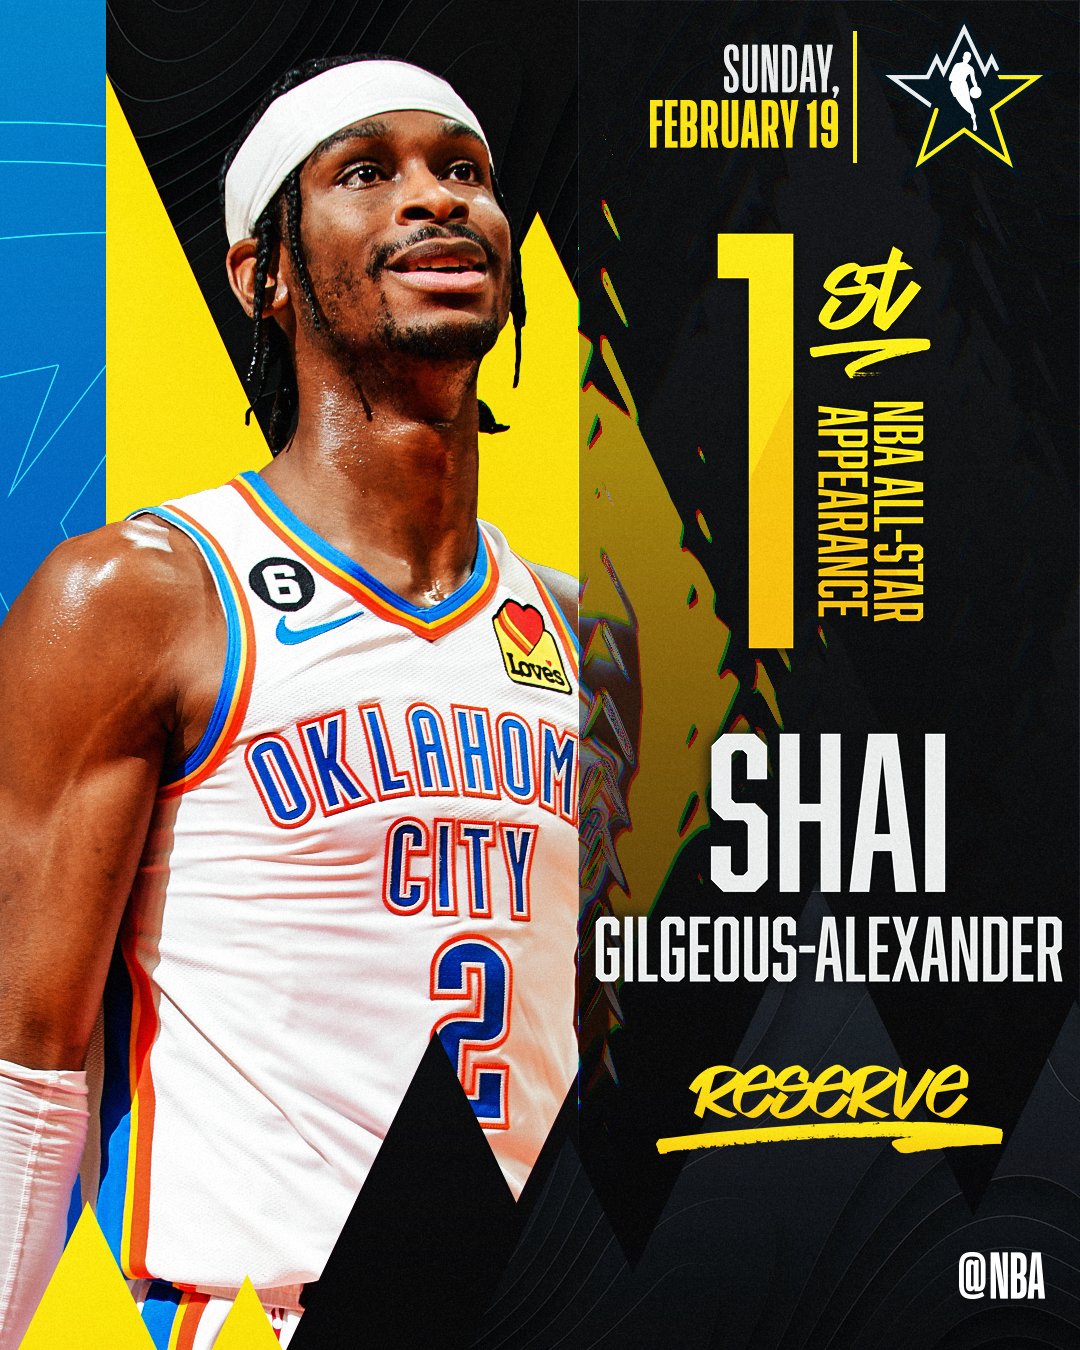 NBAAllStar on X: Making his 1st #NBAAllStar appearance Shai